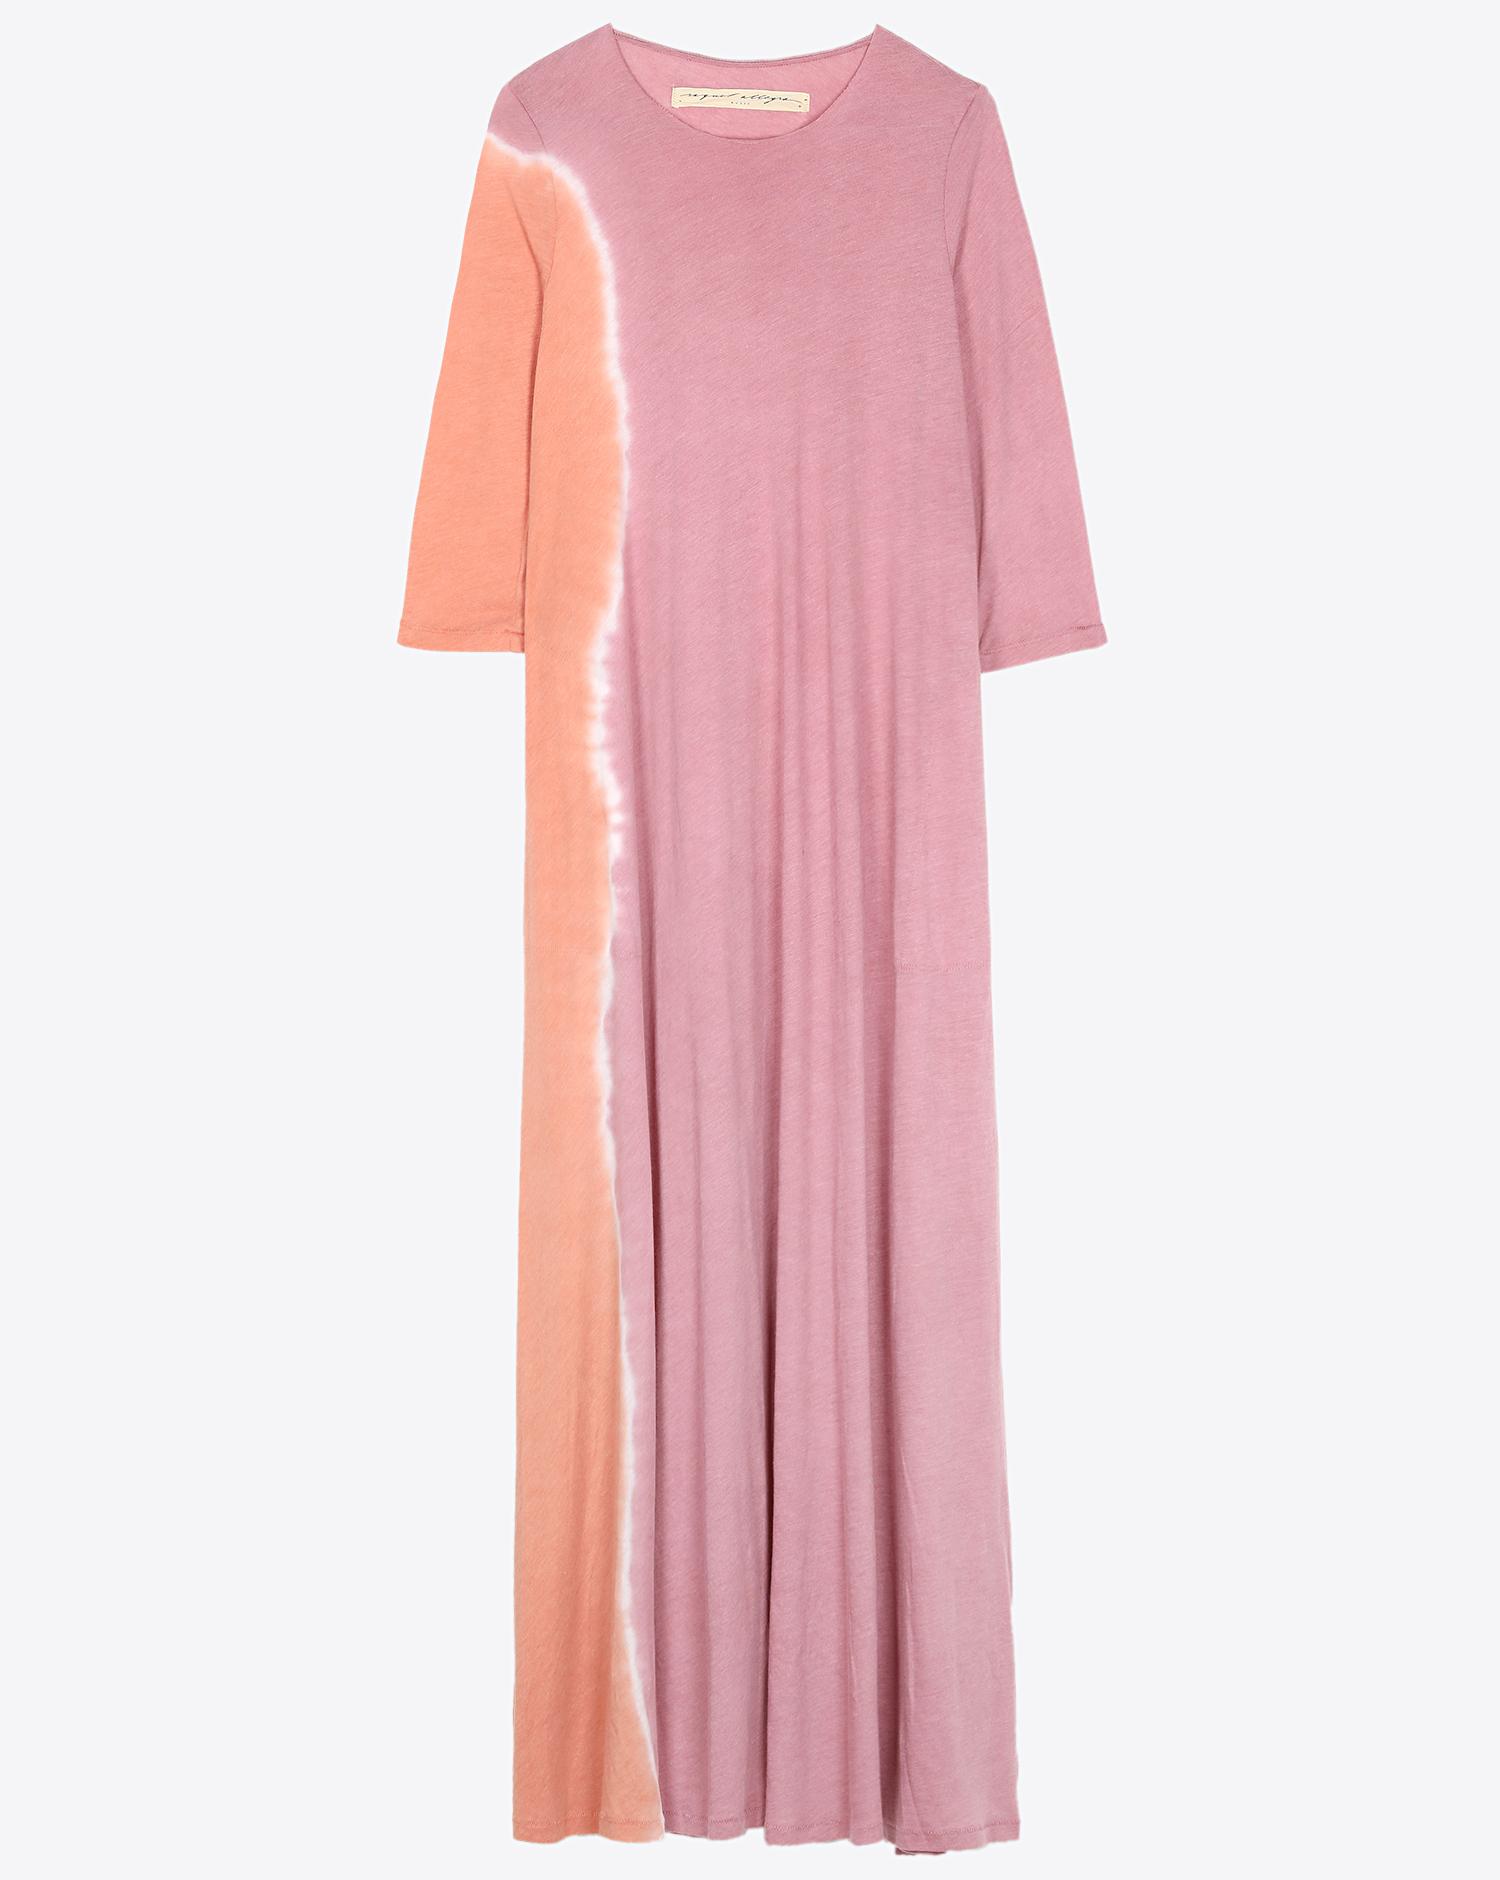 Raquel Allegra Pré-Collection 12 Sleeve Drama Maxi Dress - Pink Sunrise  